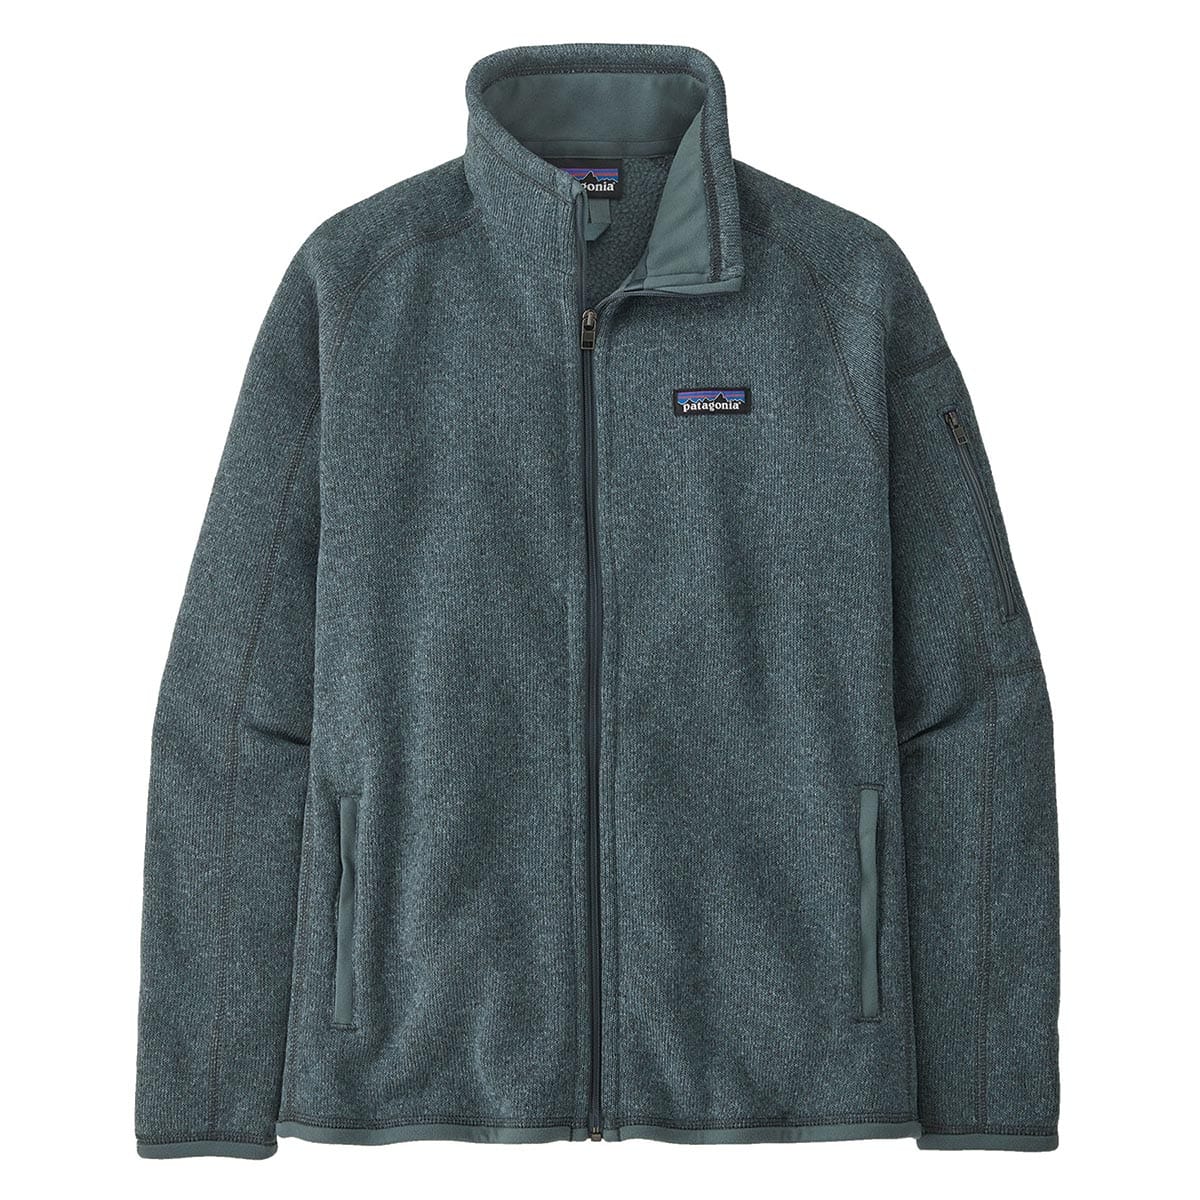 Patagonia Women's Better Sweater Full Zip Fleece Jacket - XS / Nouveau Green